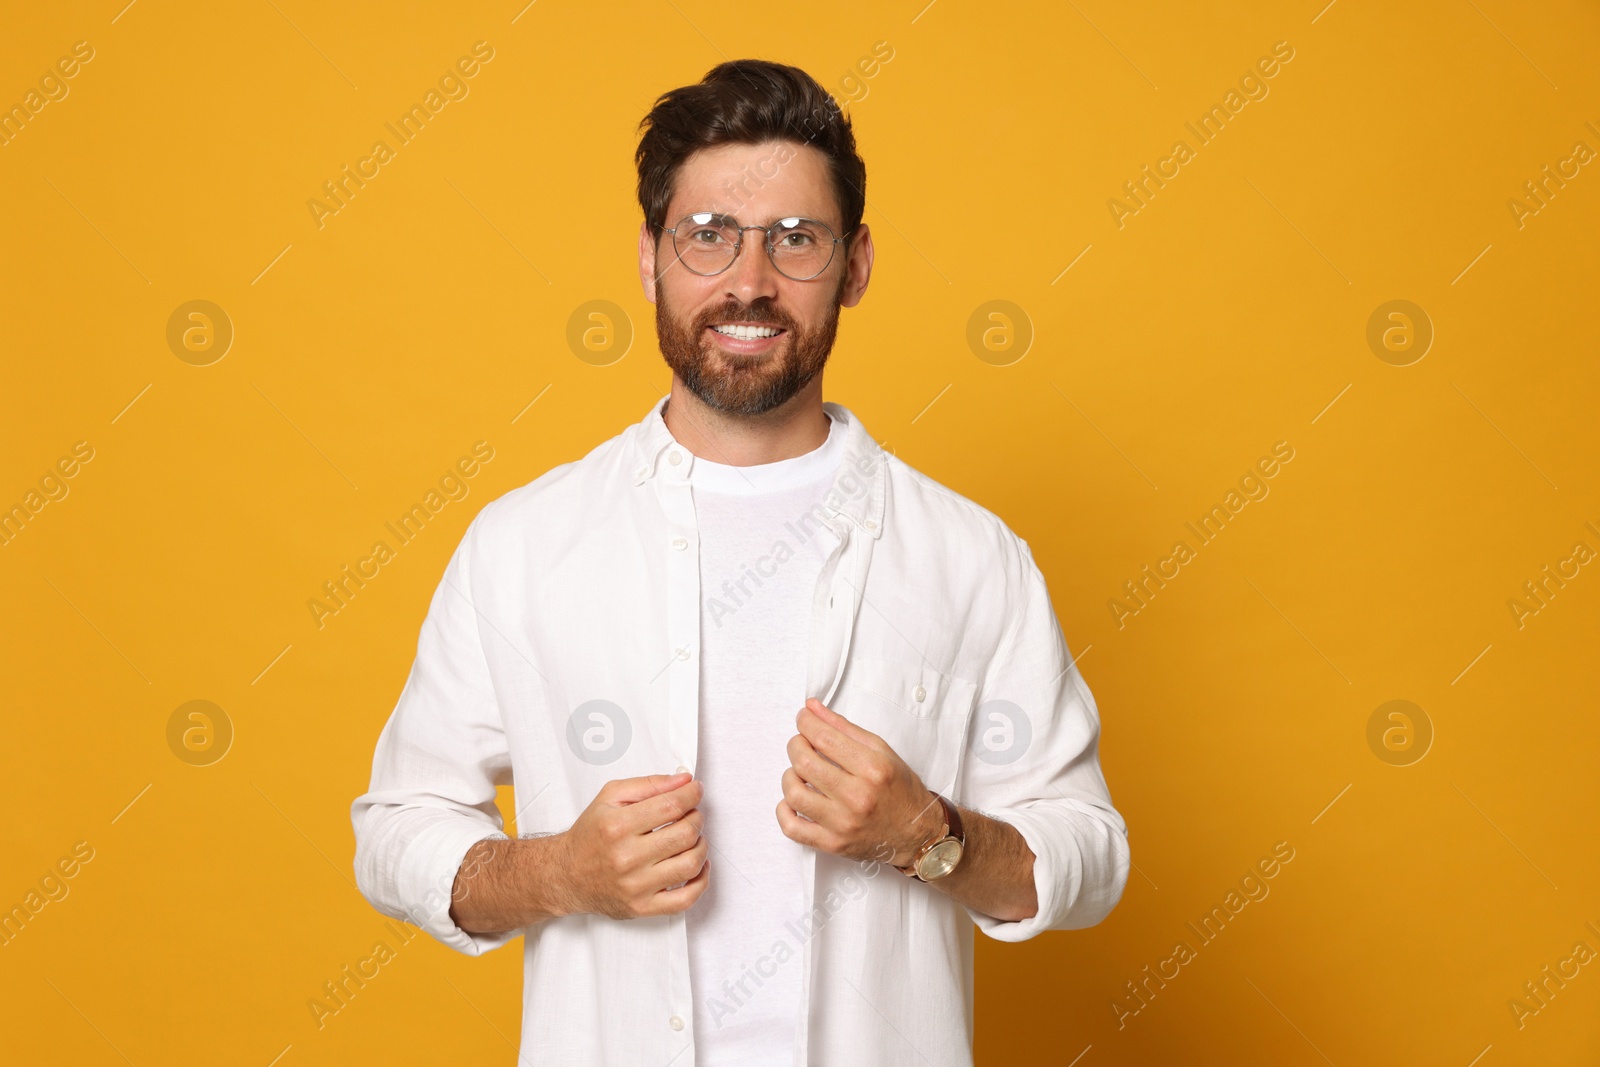 Photo of Portrait of smiling bearded man with glasses on orange background